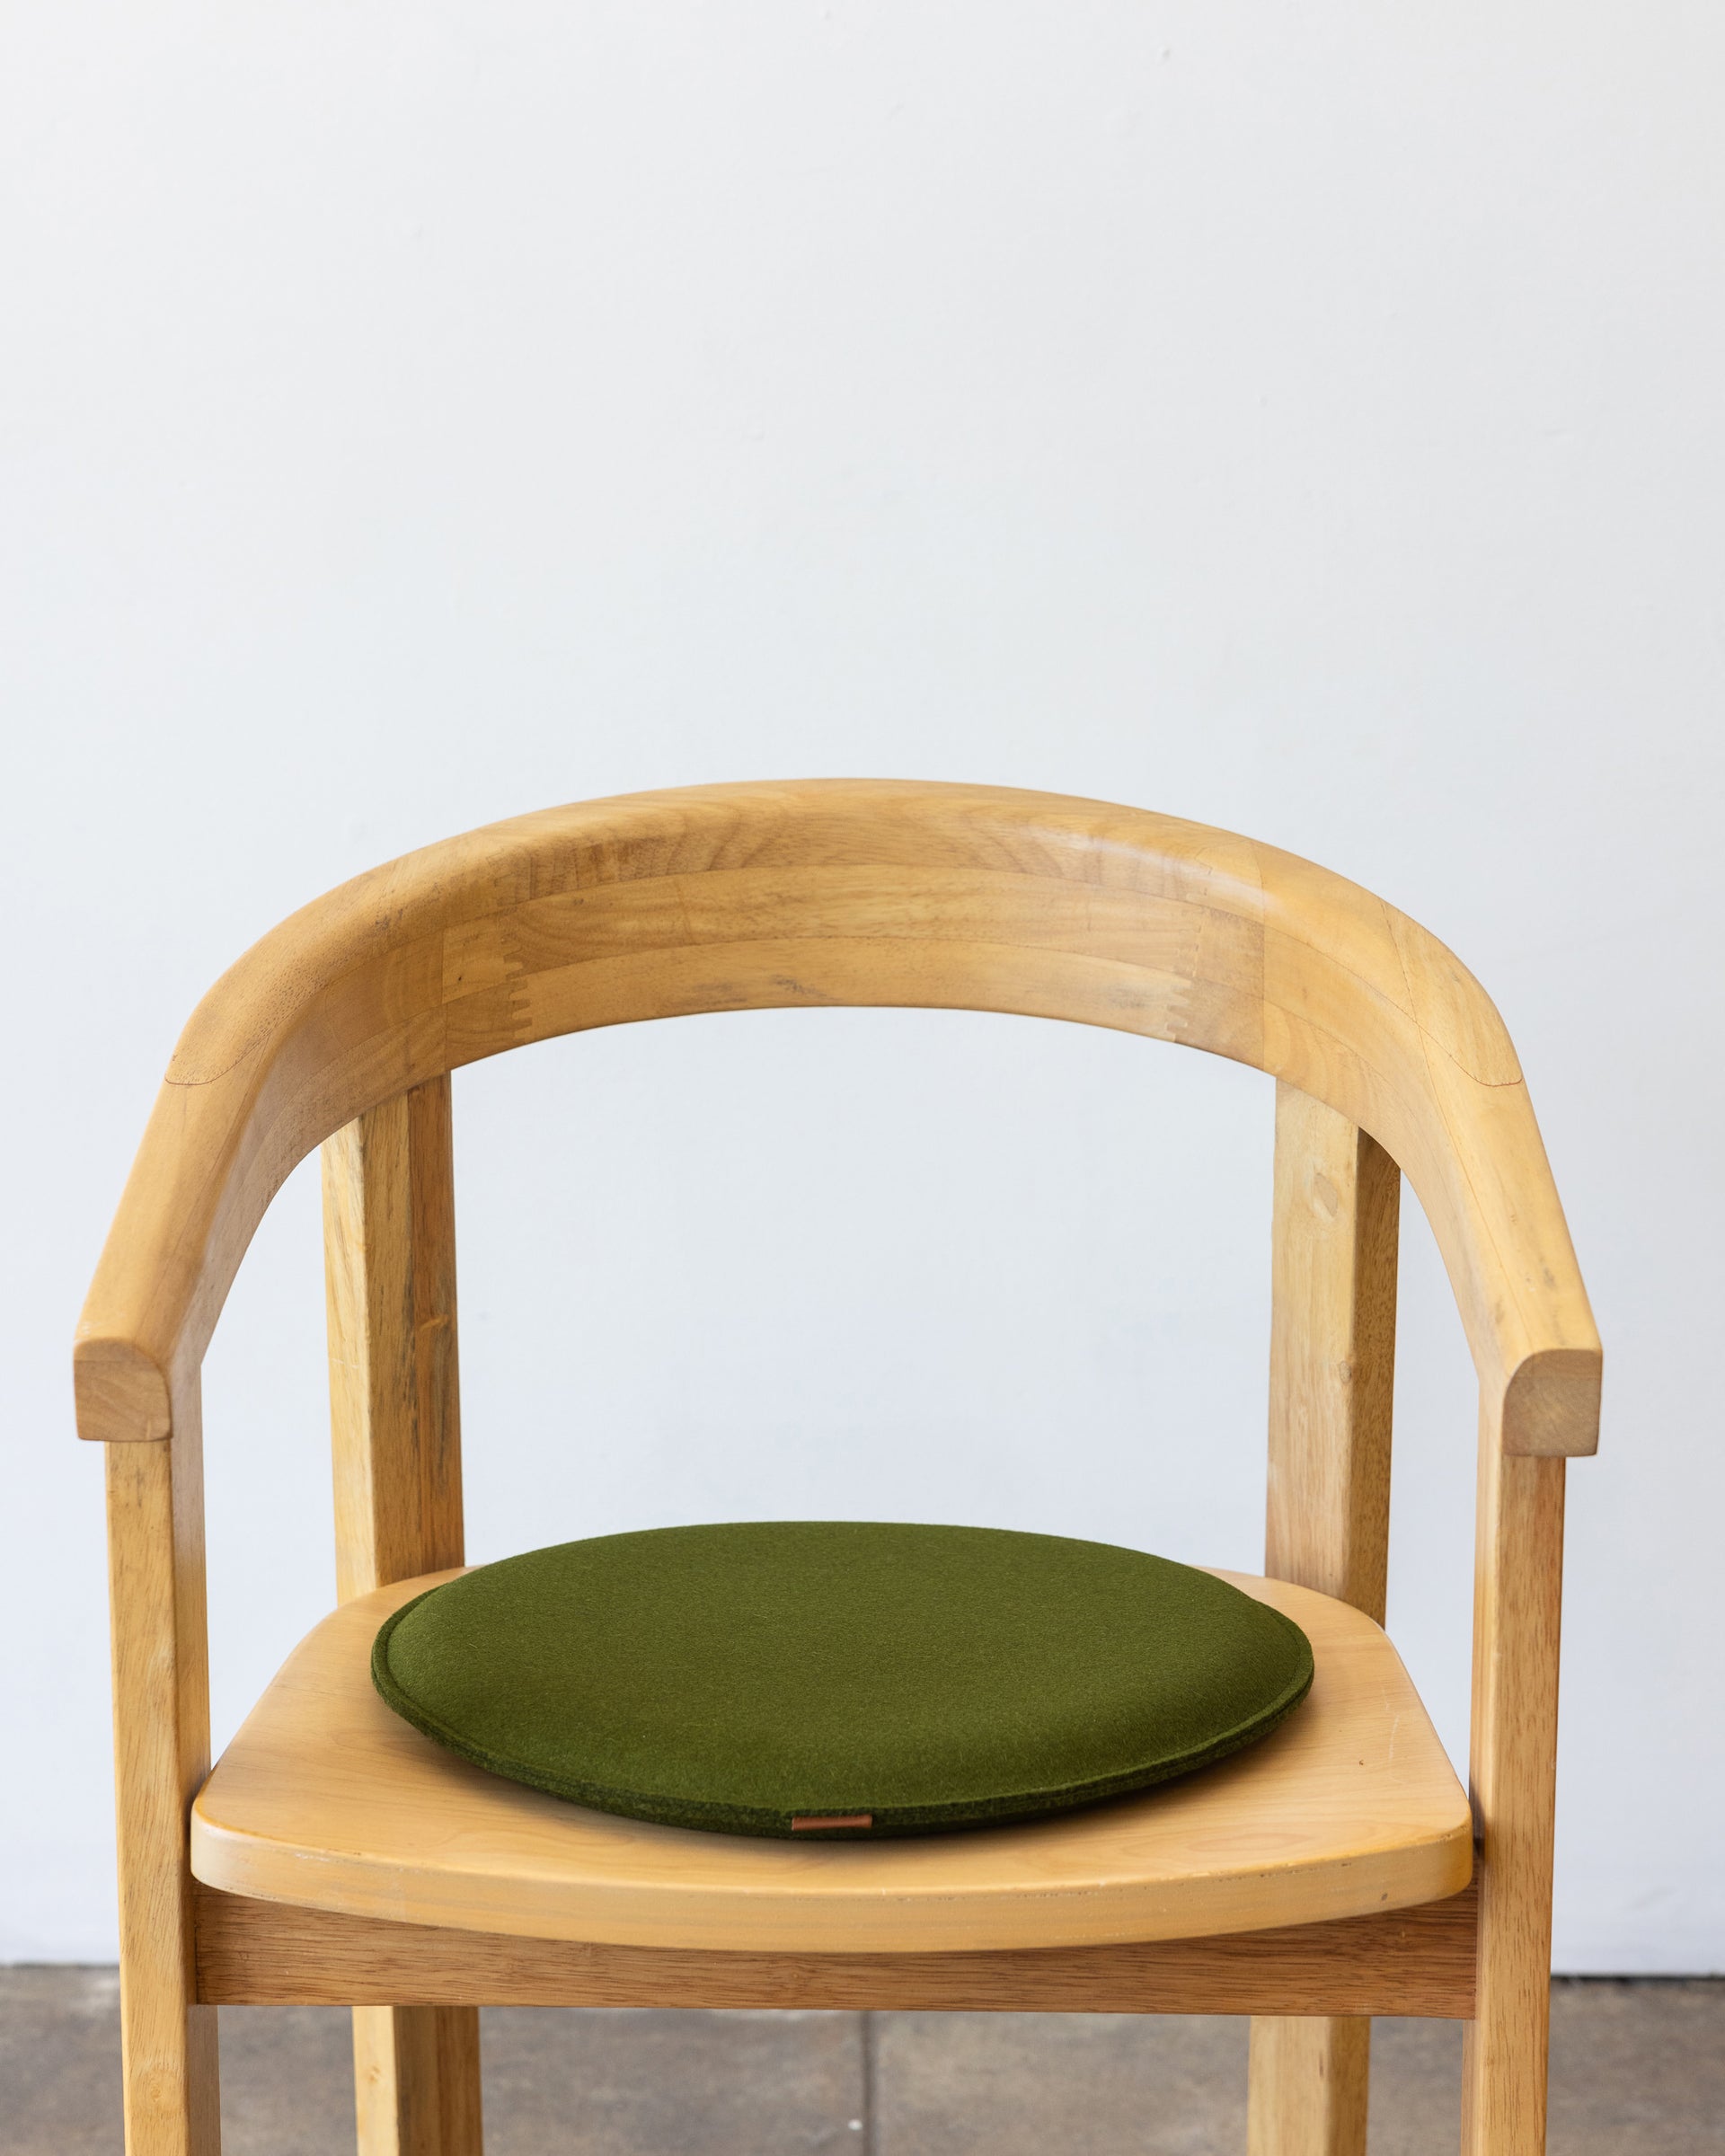 A green Zabuton Merino Wool Felt Round Seat Pad by Graf Lantz on a wooden chair, front view